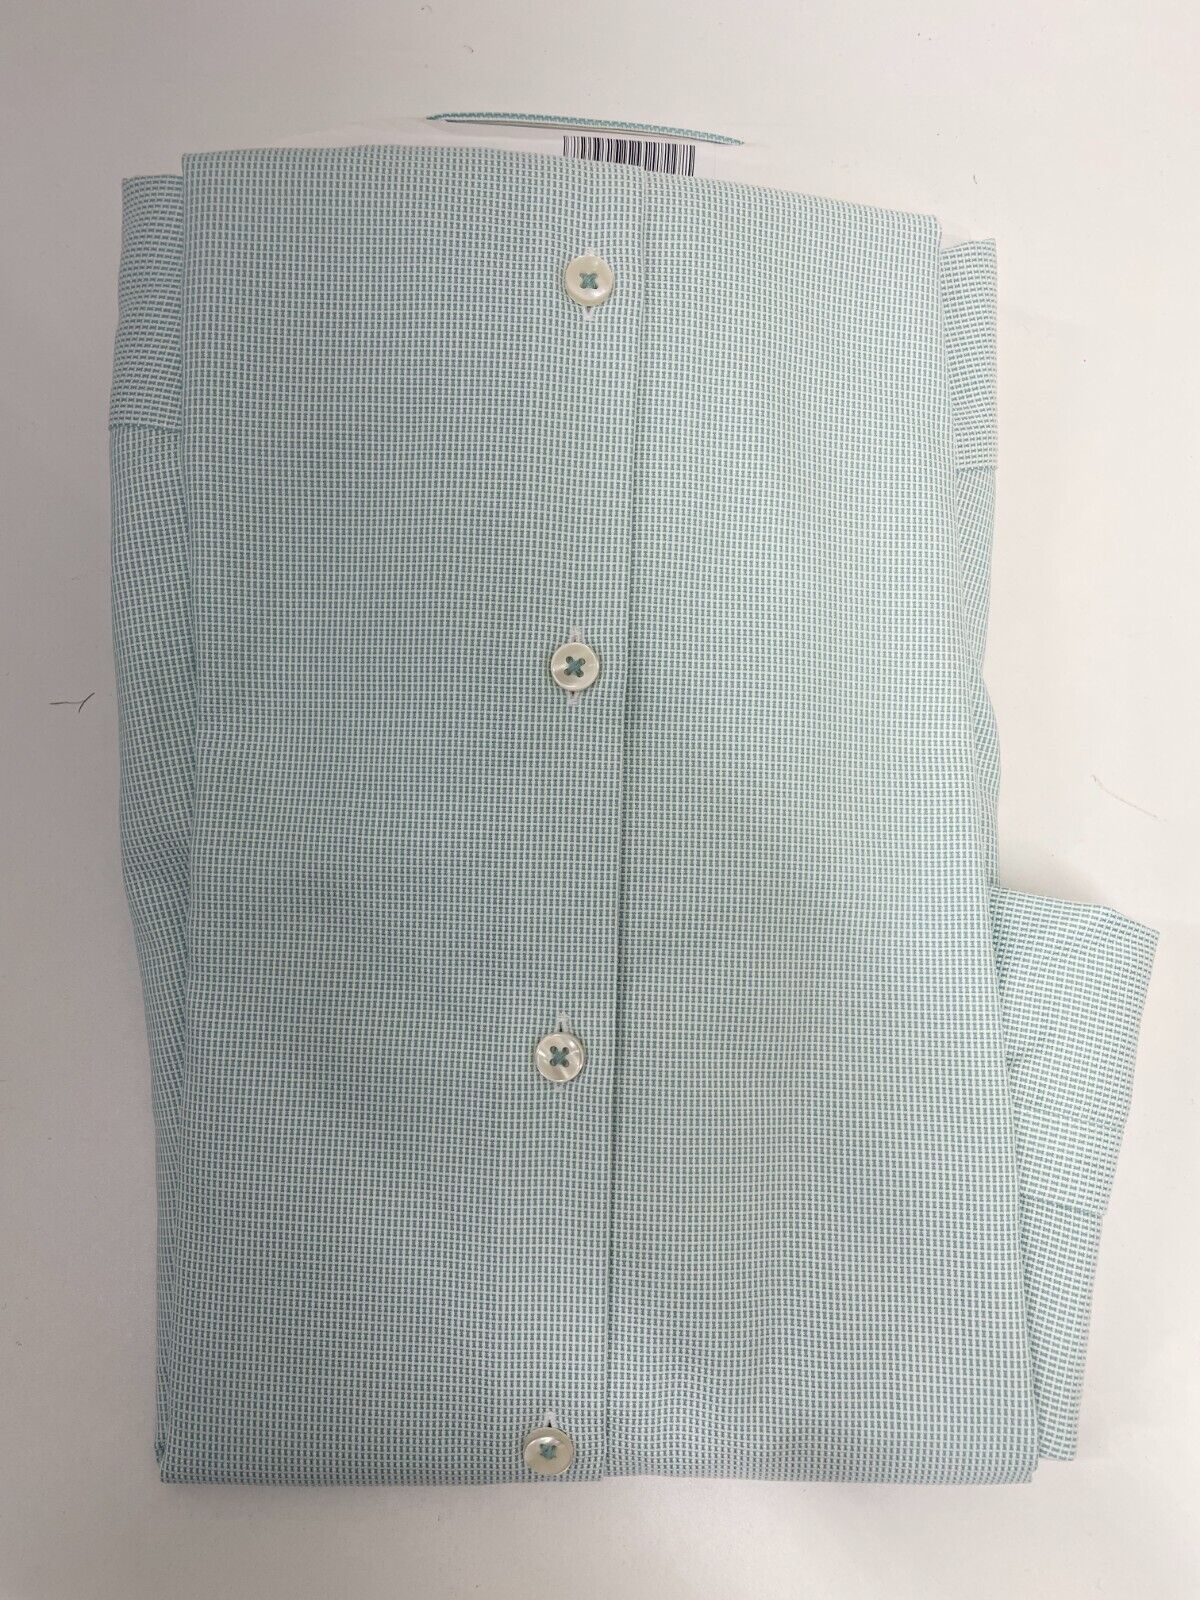 Charles Tyrwhitt Mens 16.5/36 ESF Non-Iron Rectangle Stretch Dress Shirt Green